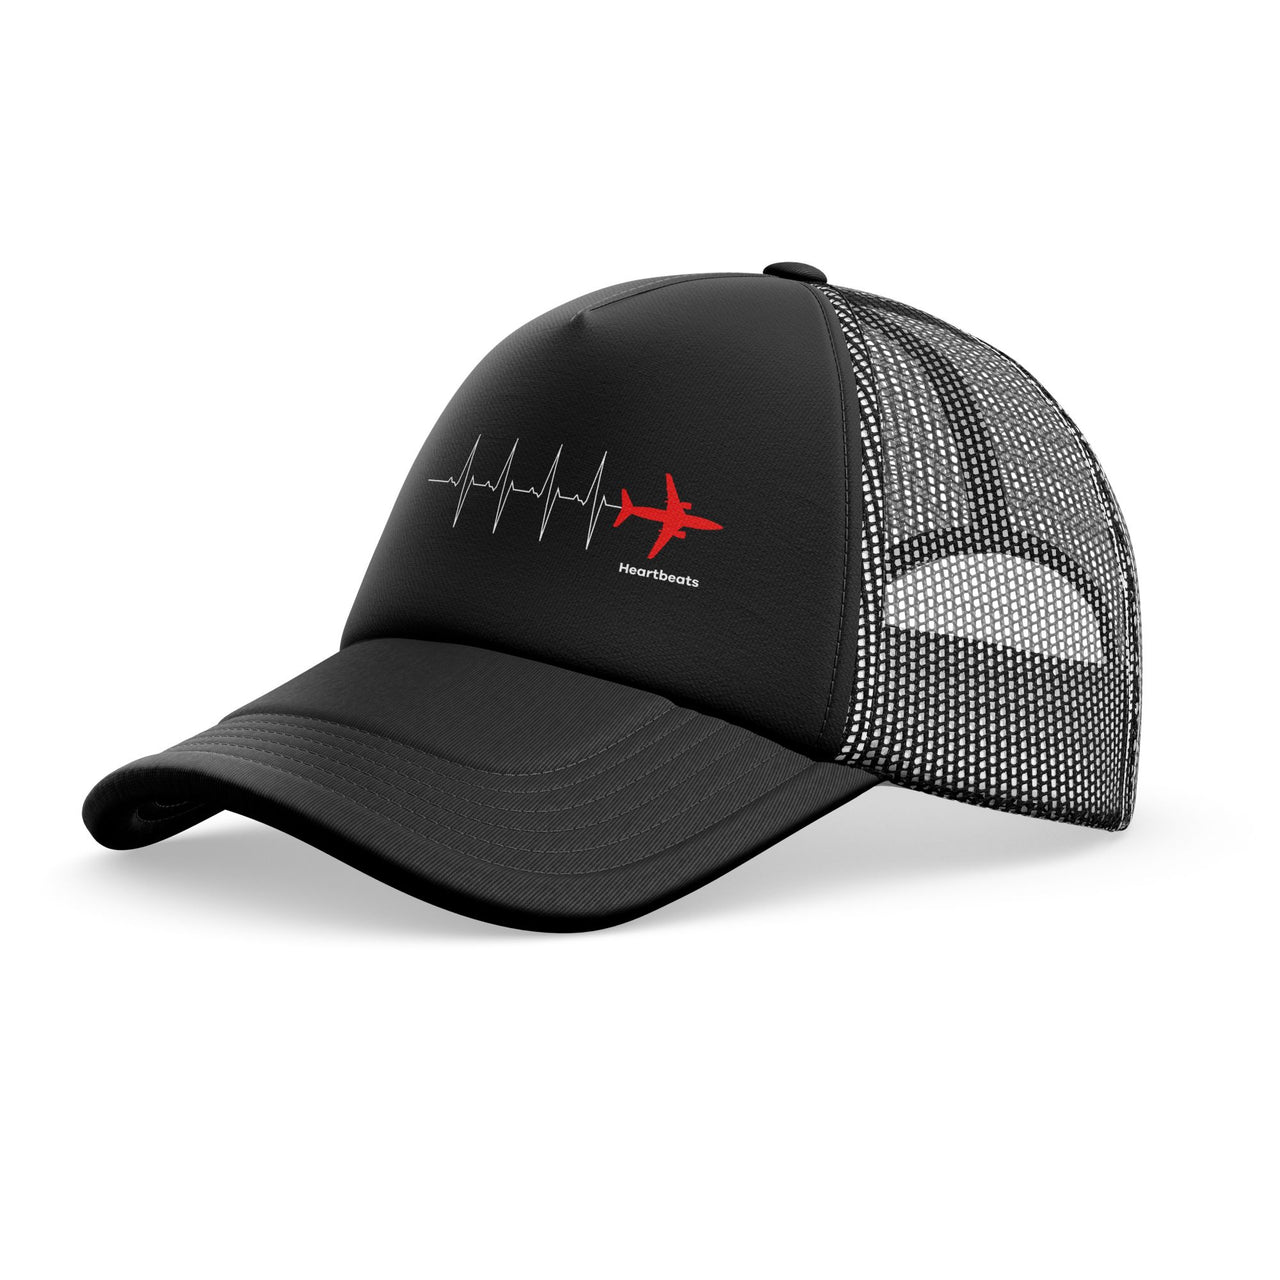 Aviation Heartbeats Designed Trucker Caps & Hats